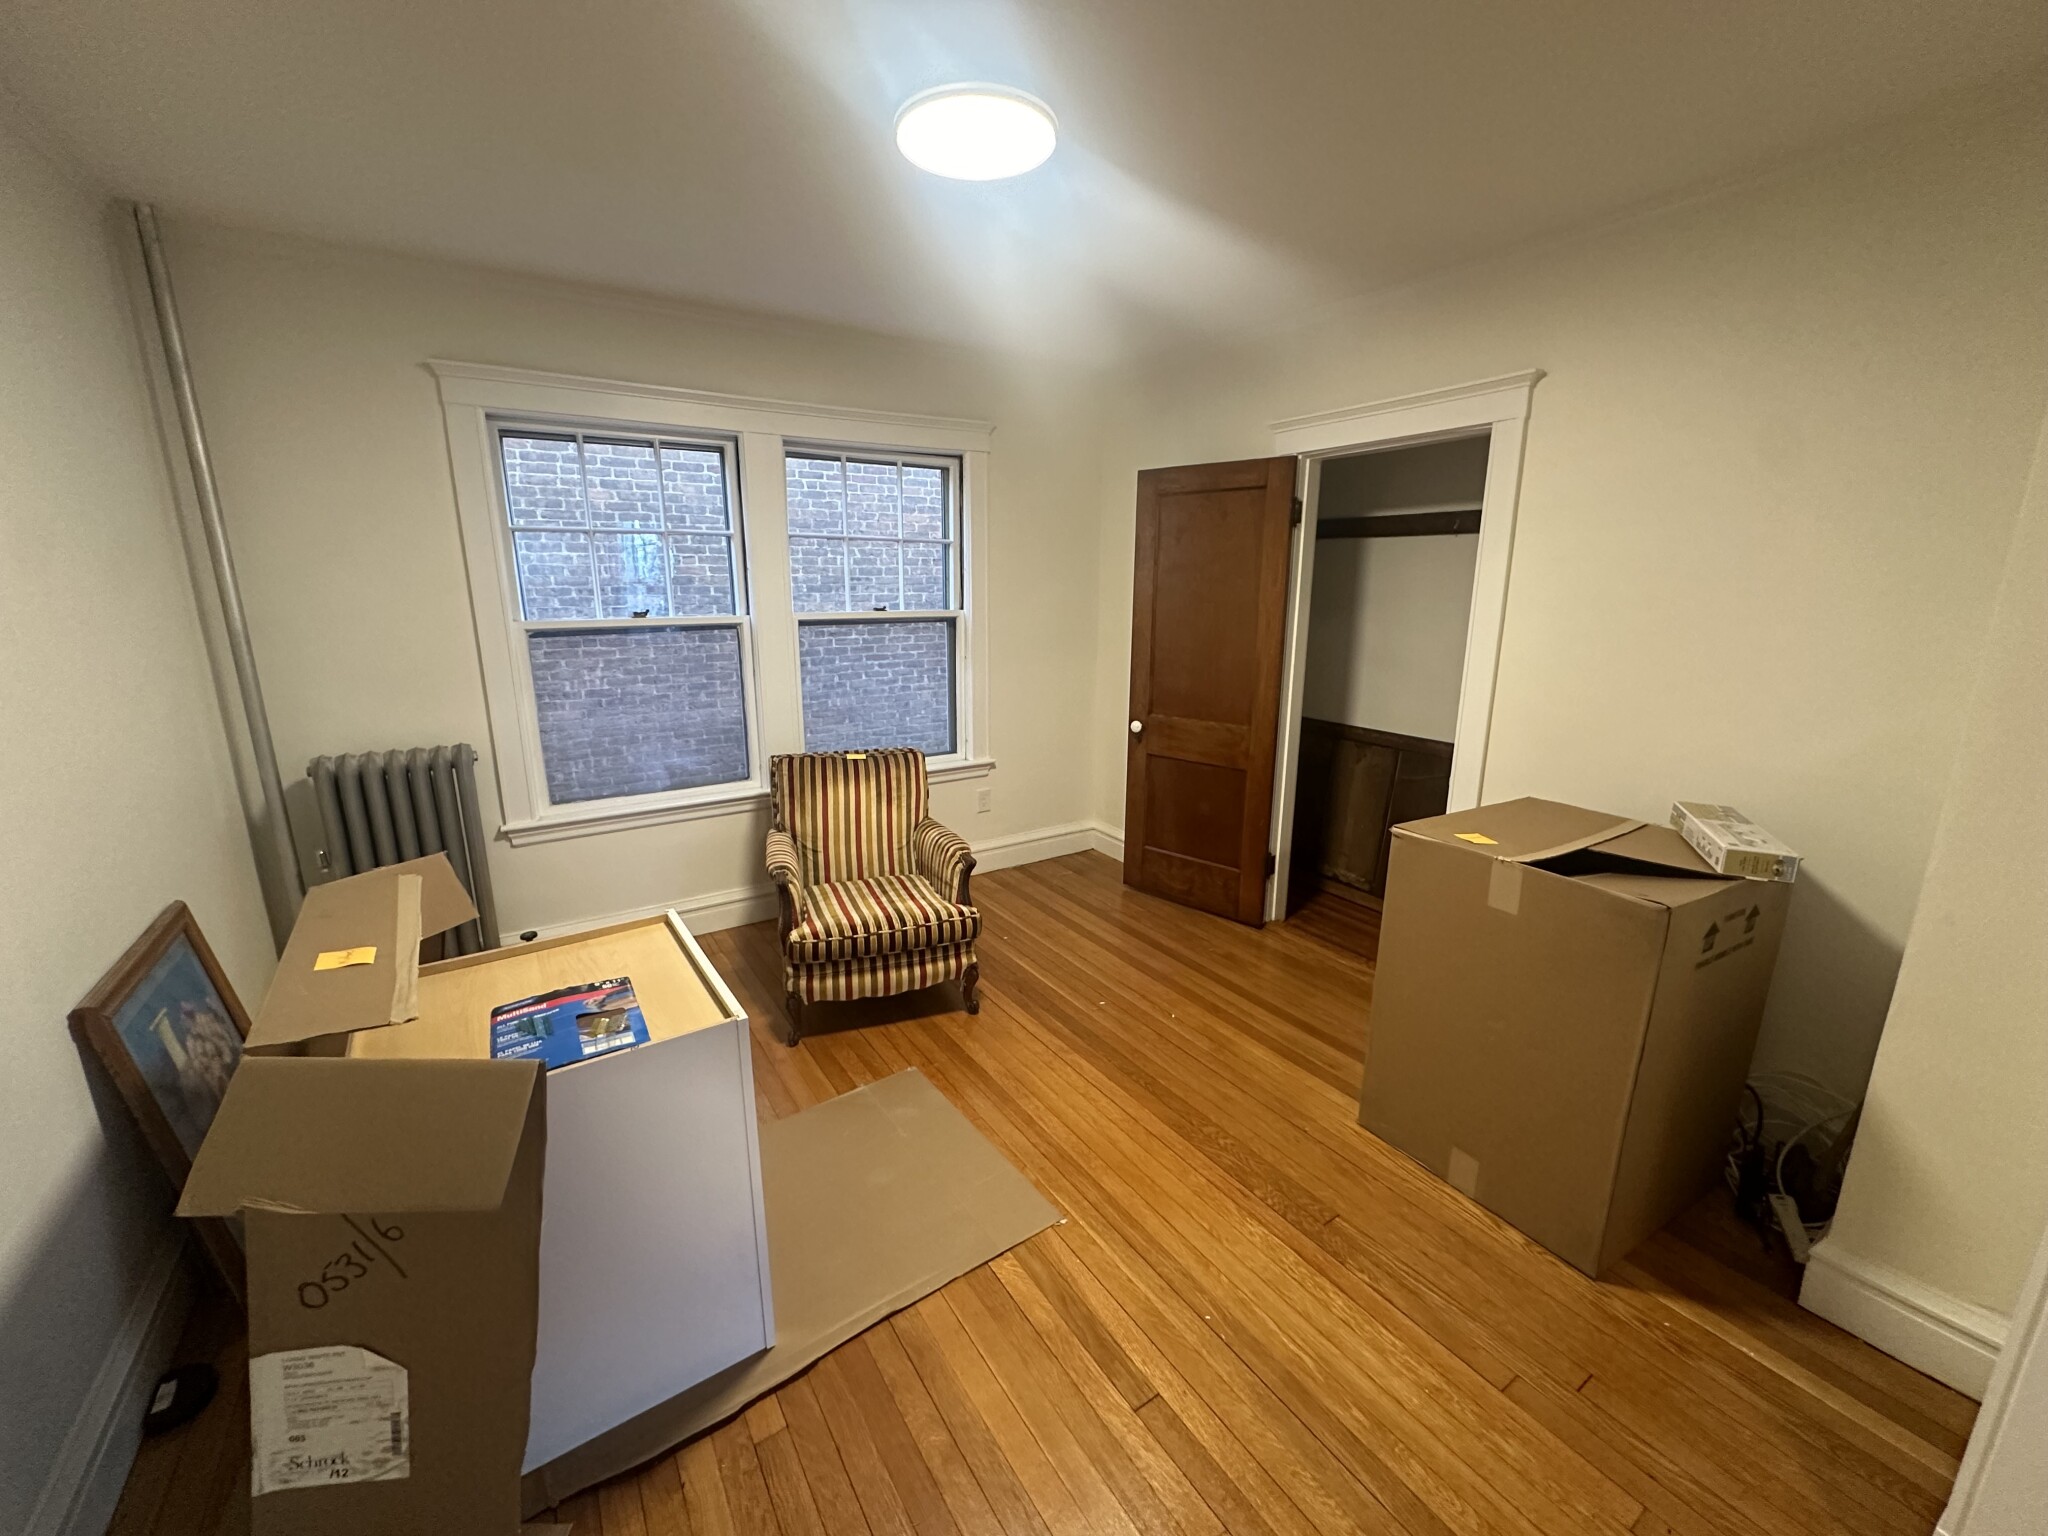 Photos of apartment on Concord Ave.,Cambridge MA 02138